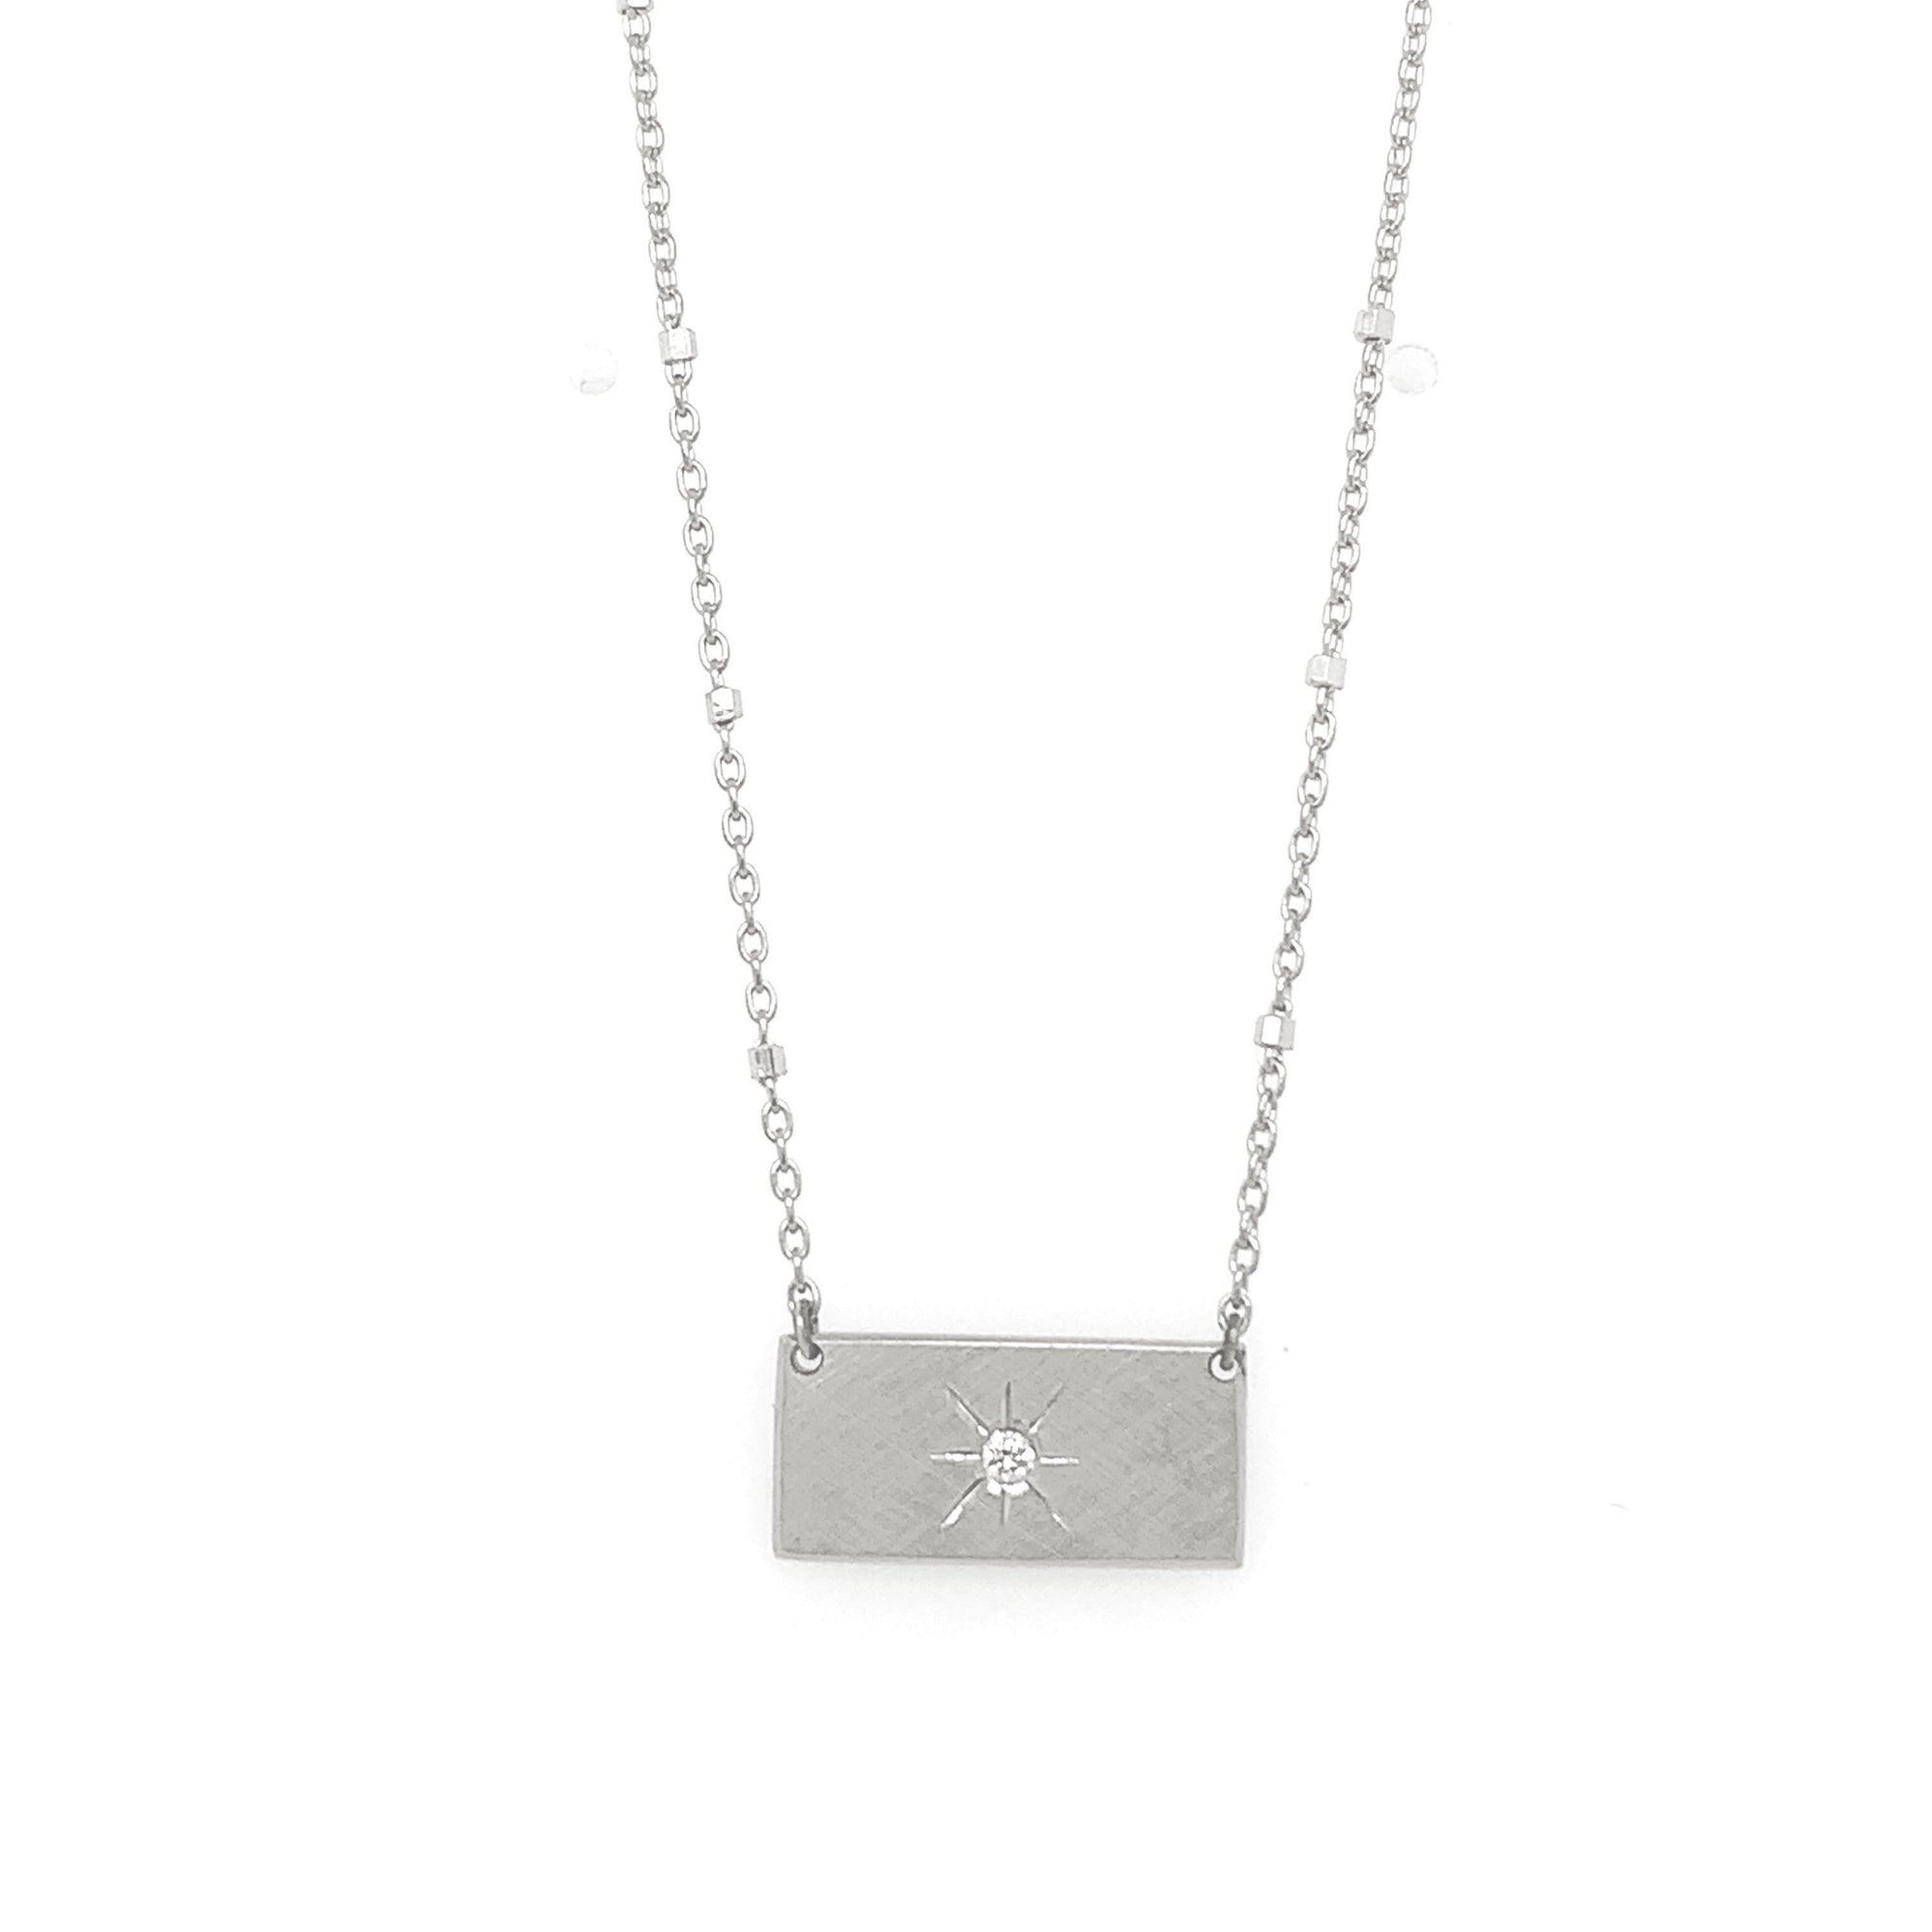 14k white gold COCA bar necklace with diamond